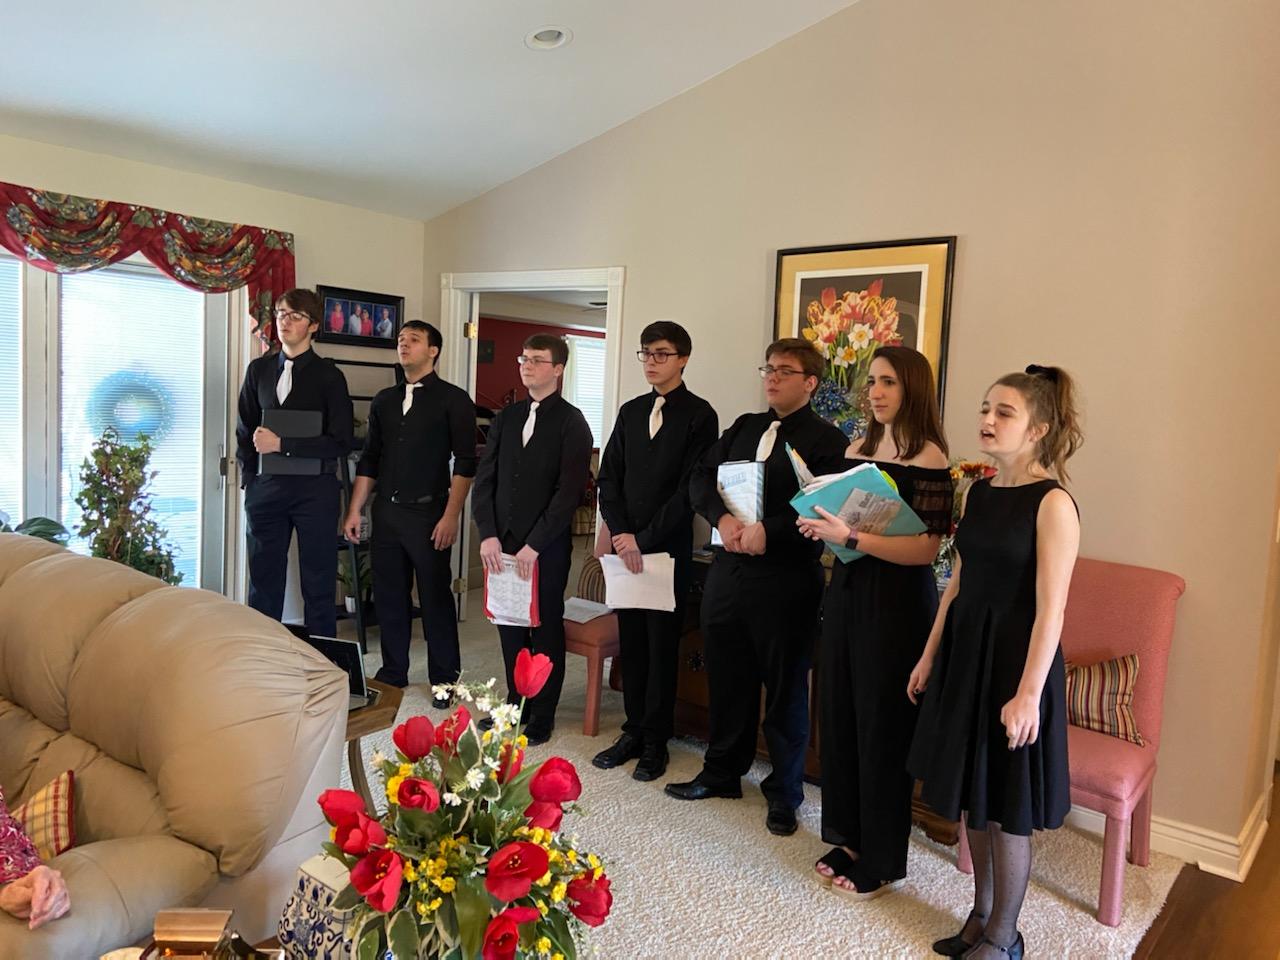 Photo of the elite group of 7 Mount Carmel High School singers.